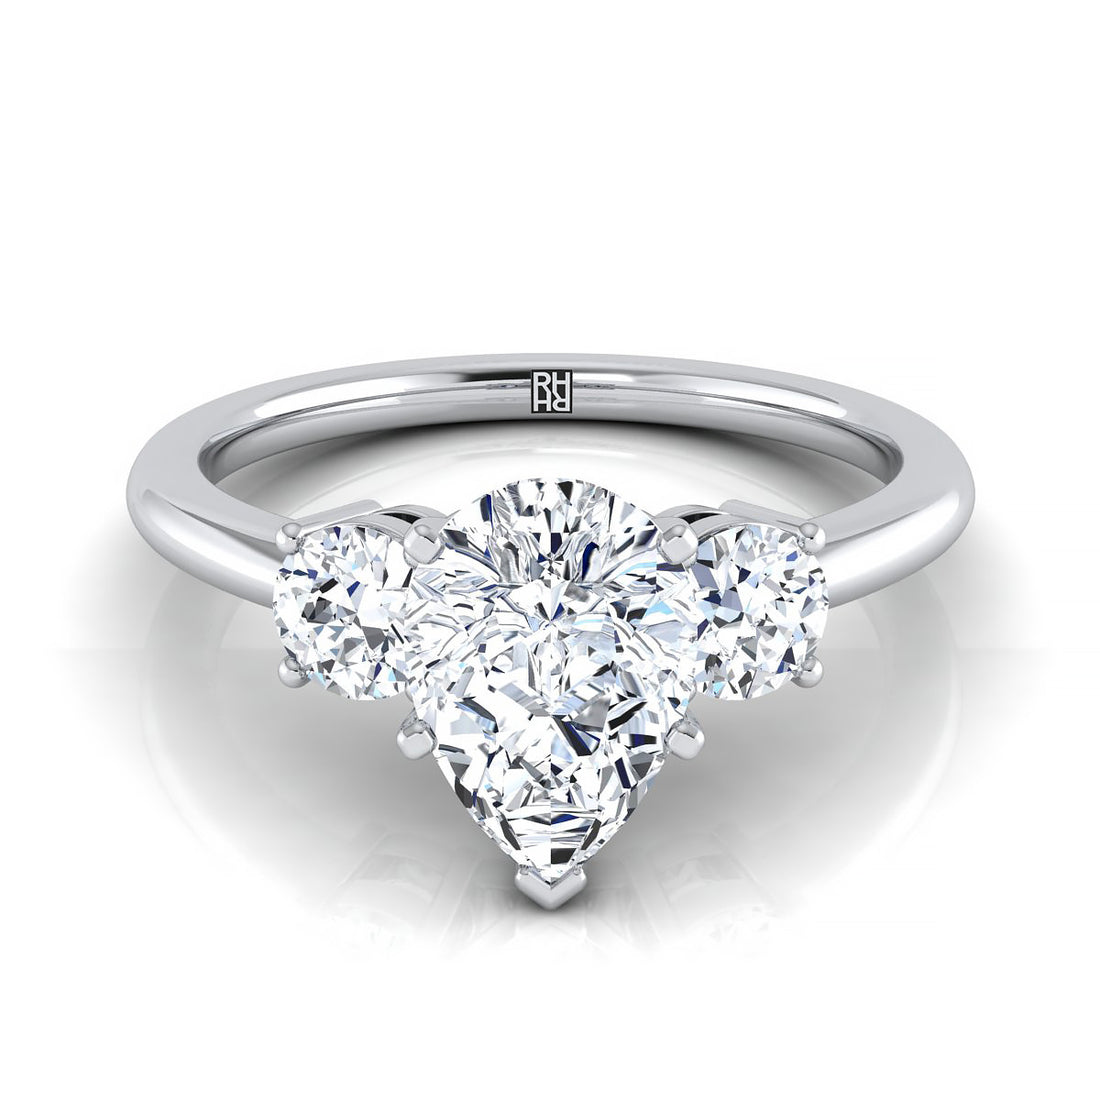 The Average Cost of 1 Carat Diamond Ring